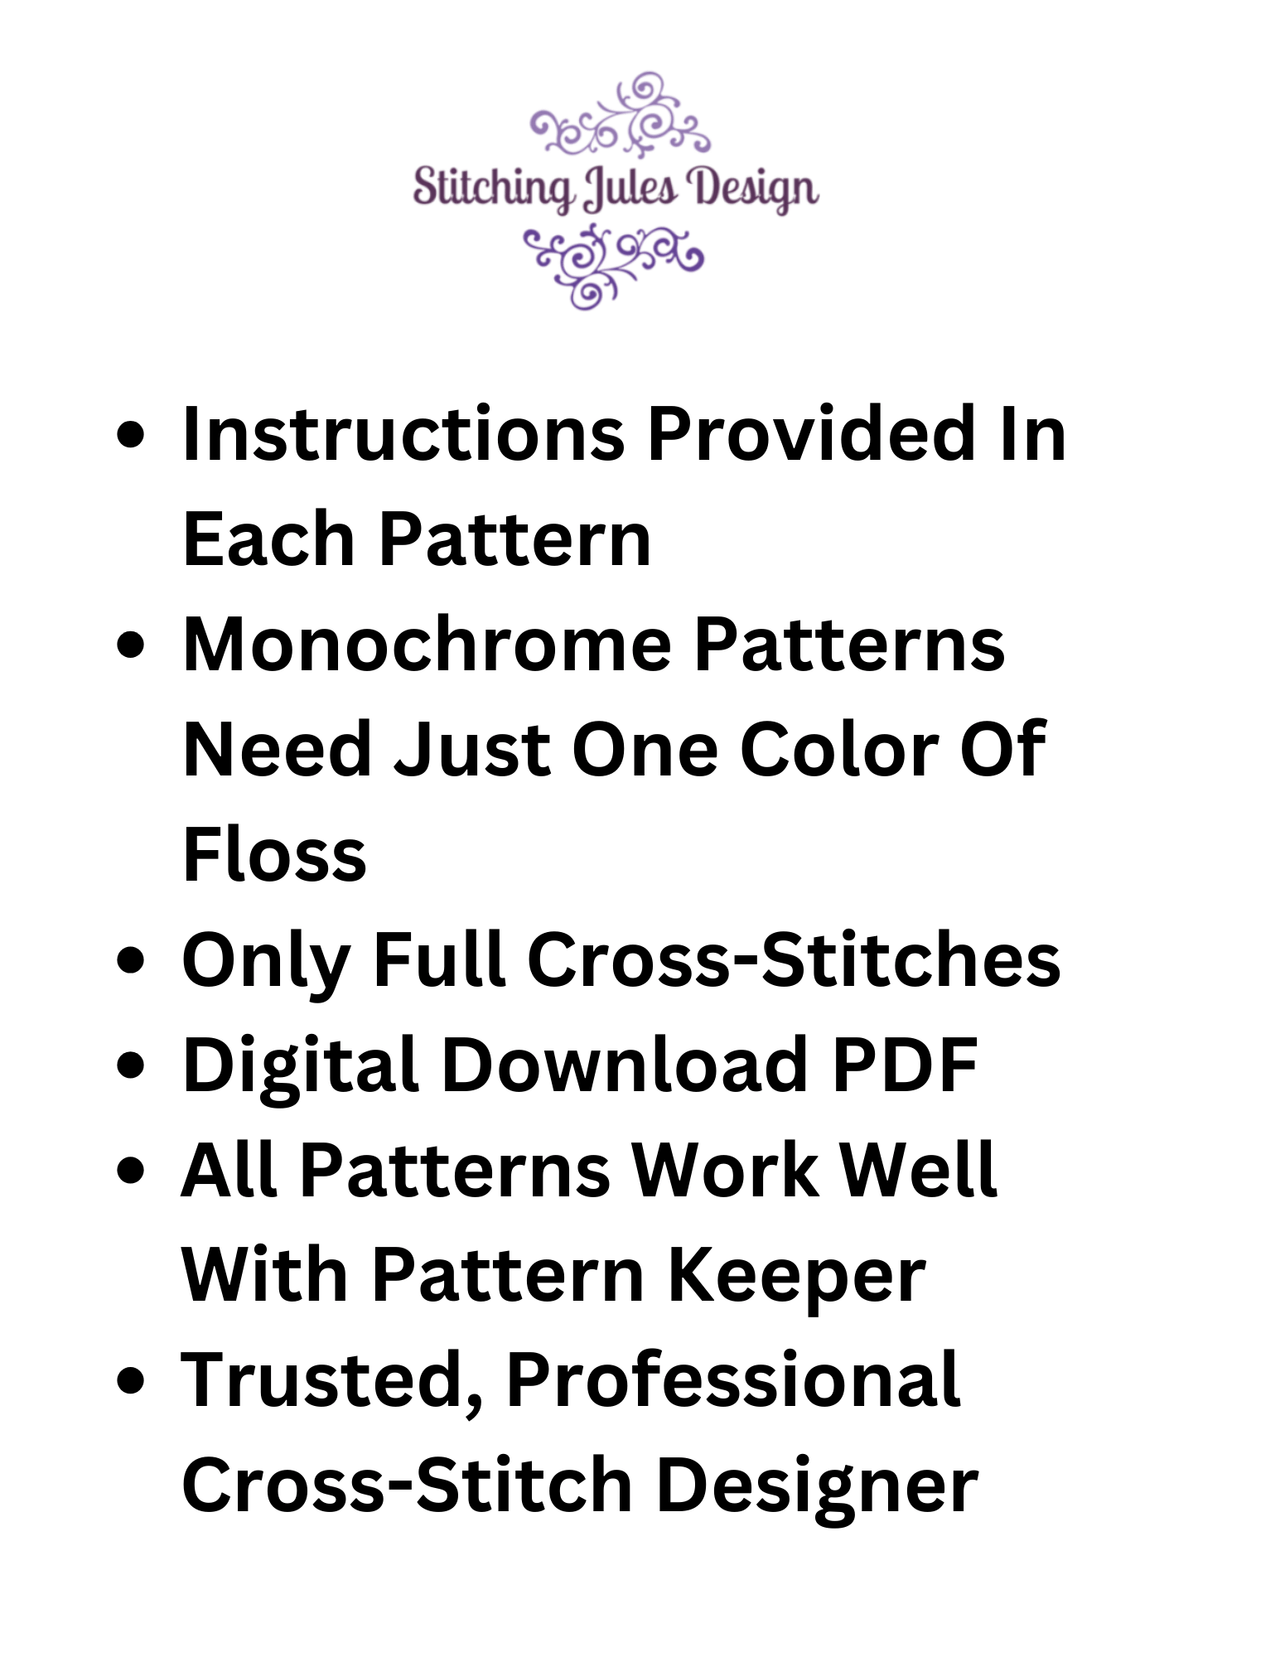 Stitching Jules Design Cross Stitch Pattern Human Eye Monochrome Blackwork Cross Stitch Pattern - Instant PDF Download